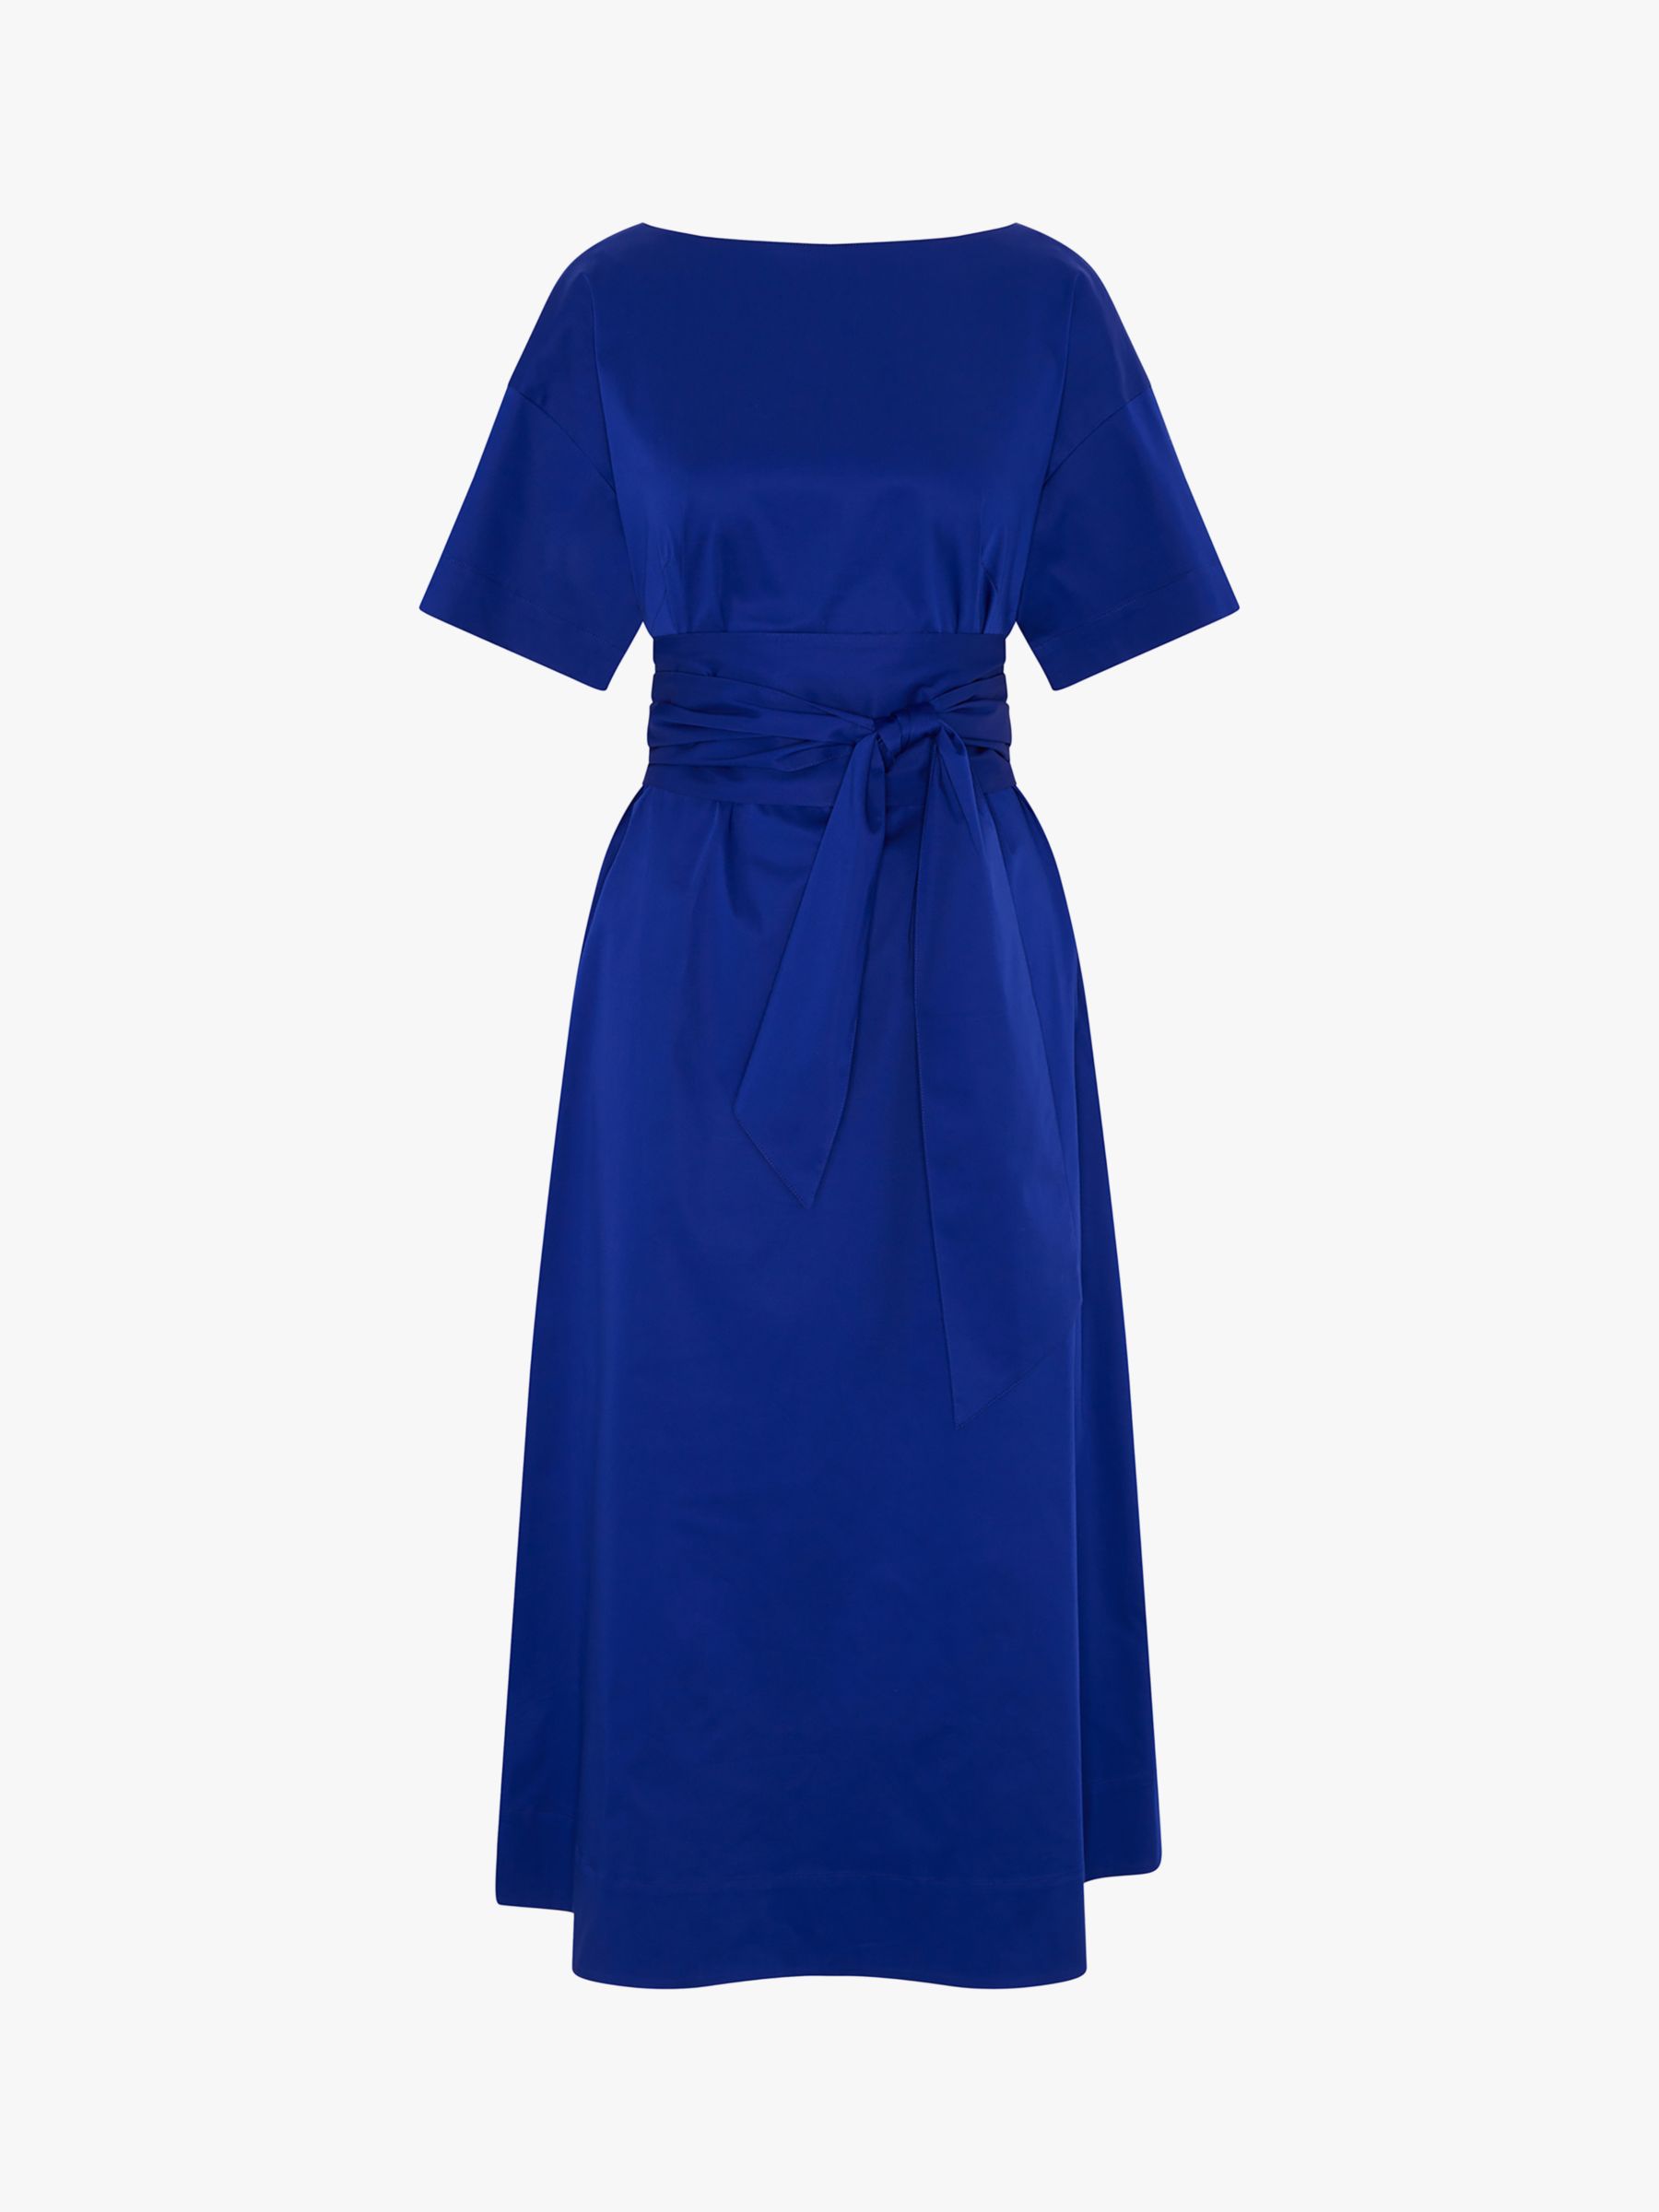 Jasper Conran London Bonne A-Line Swing Dress, Blue, 8